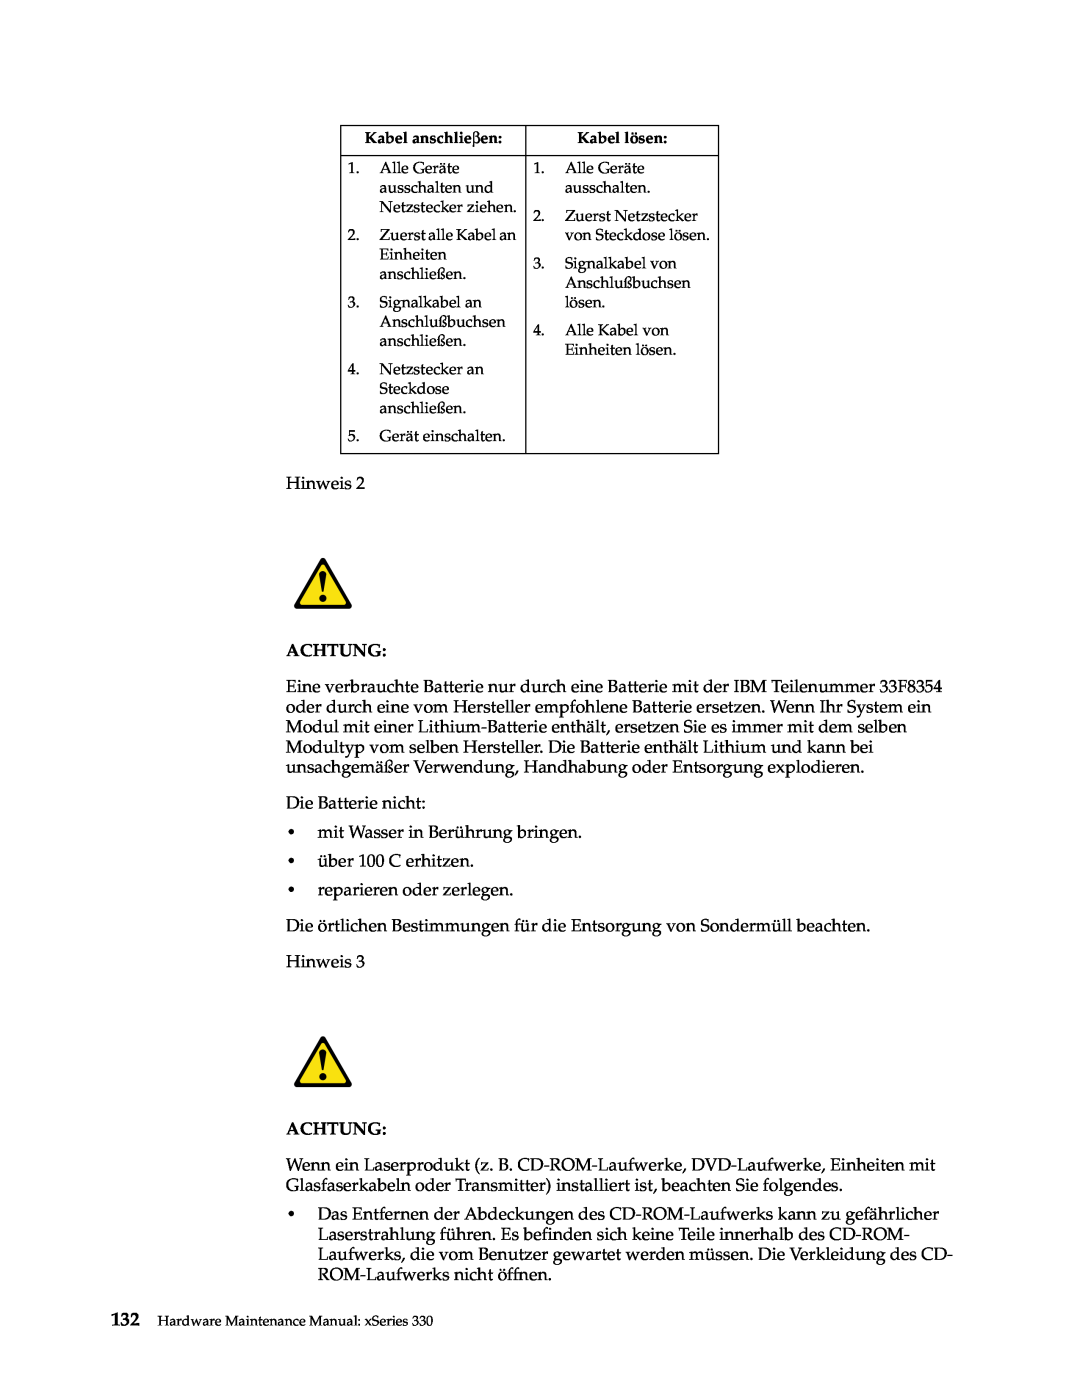 IBM xSeries 330 manual Achtung 